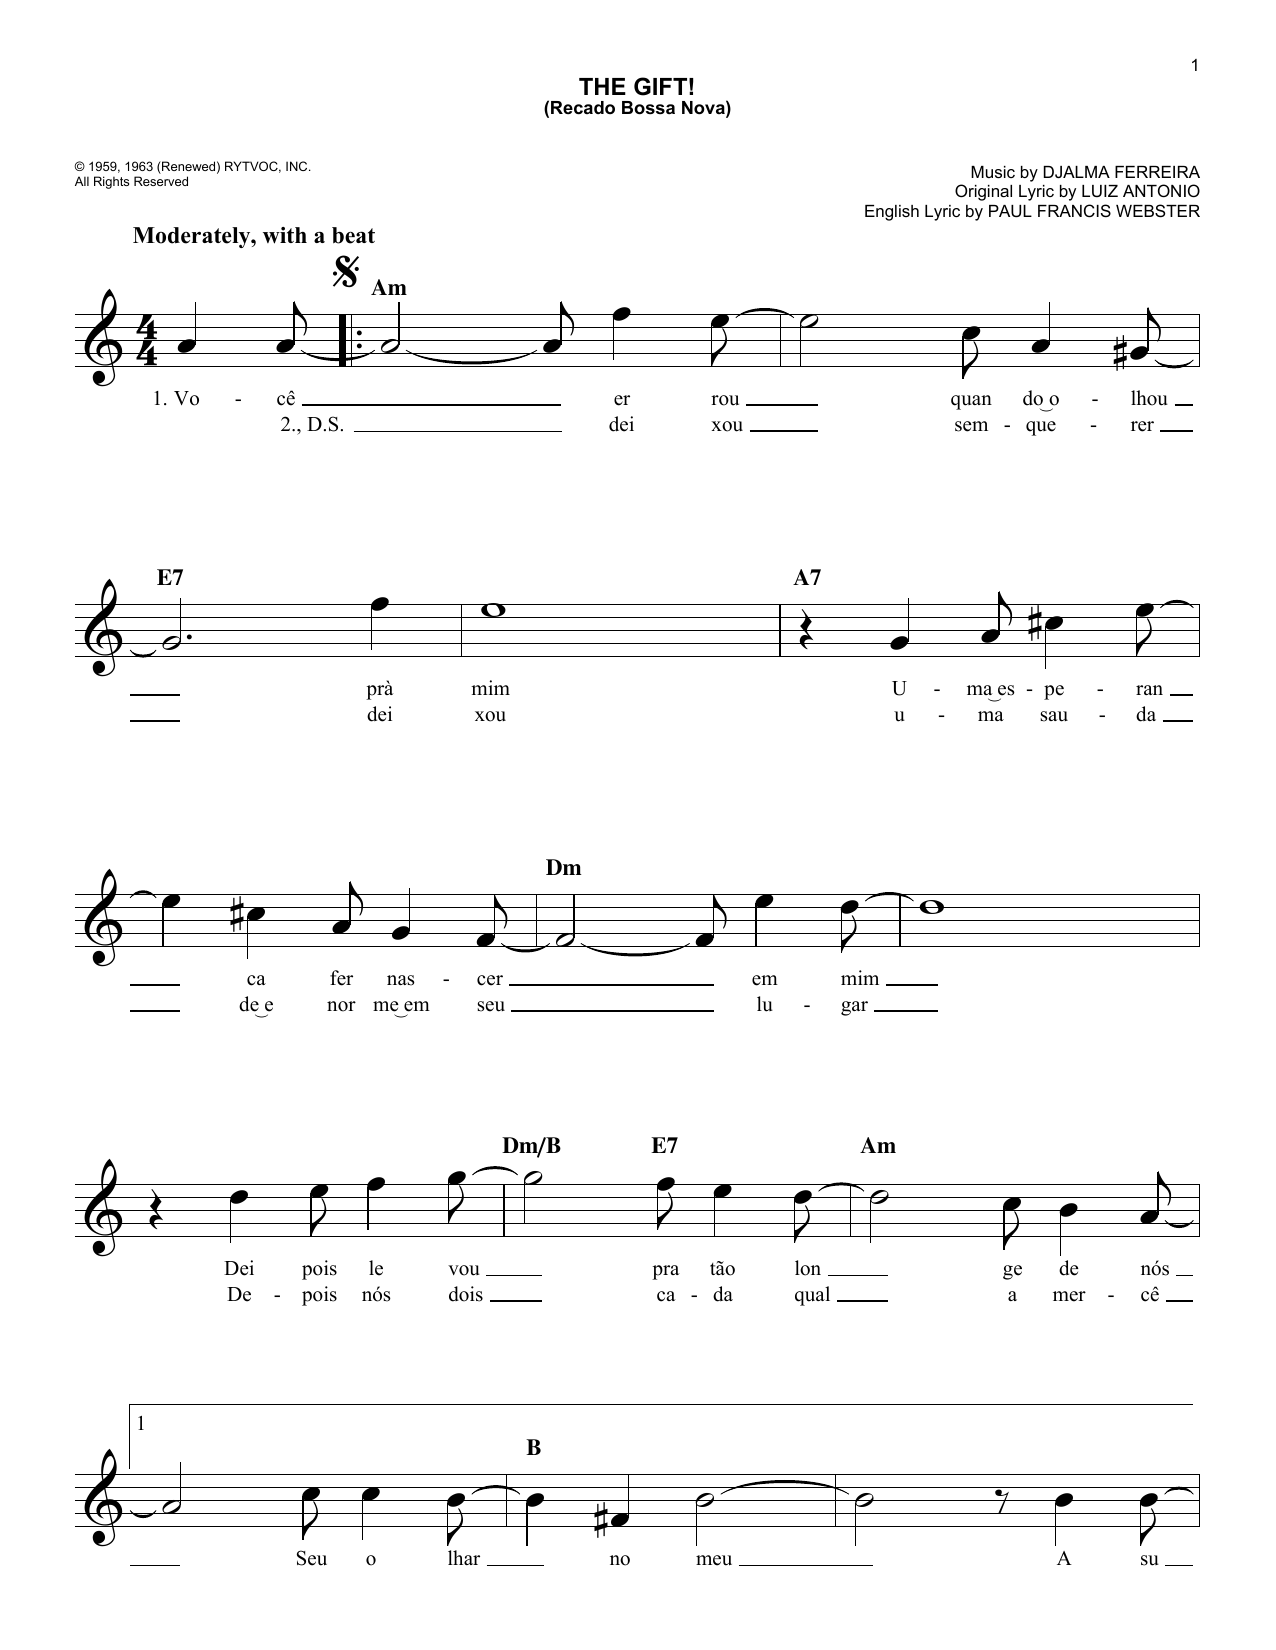 Download Djalma Ferreira The Gift! (Recado Bossa Nova) Sheet Music and learn how to play Melody Line, Lyrics & Chords PDF digital score in minutes